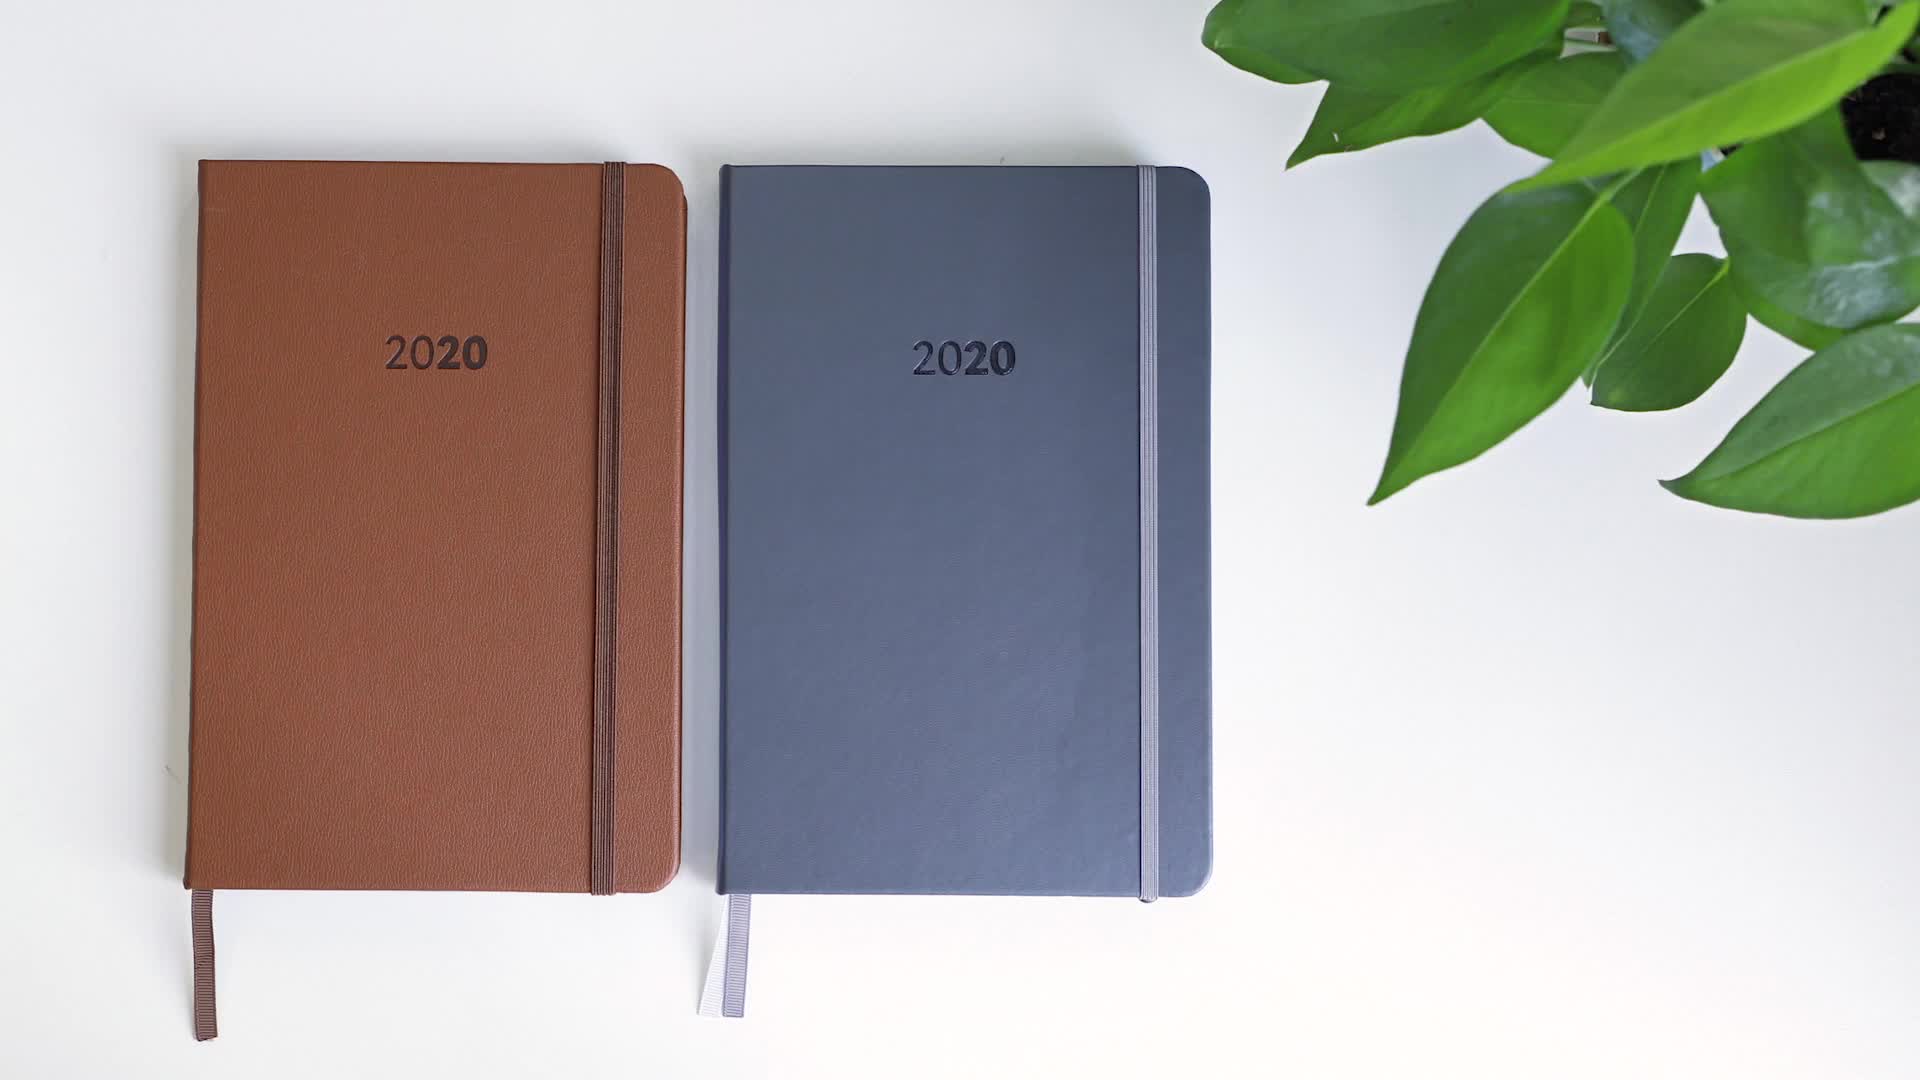 2021 Planificateur de journal en gros sur mesure Agenda Agenda Stationery Notebook Printing1